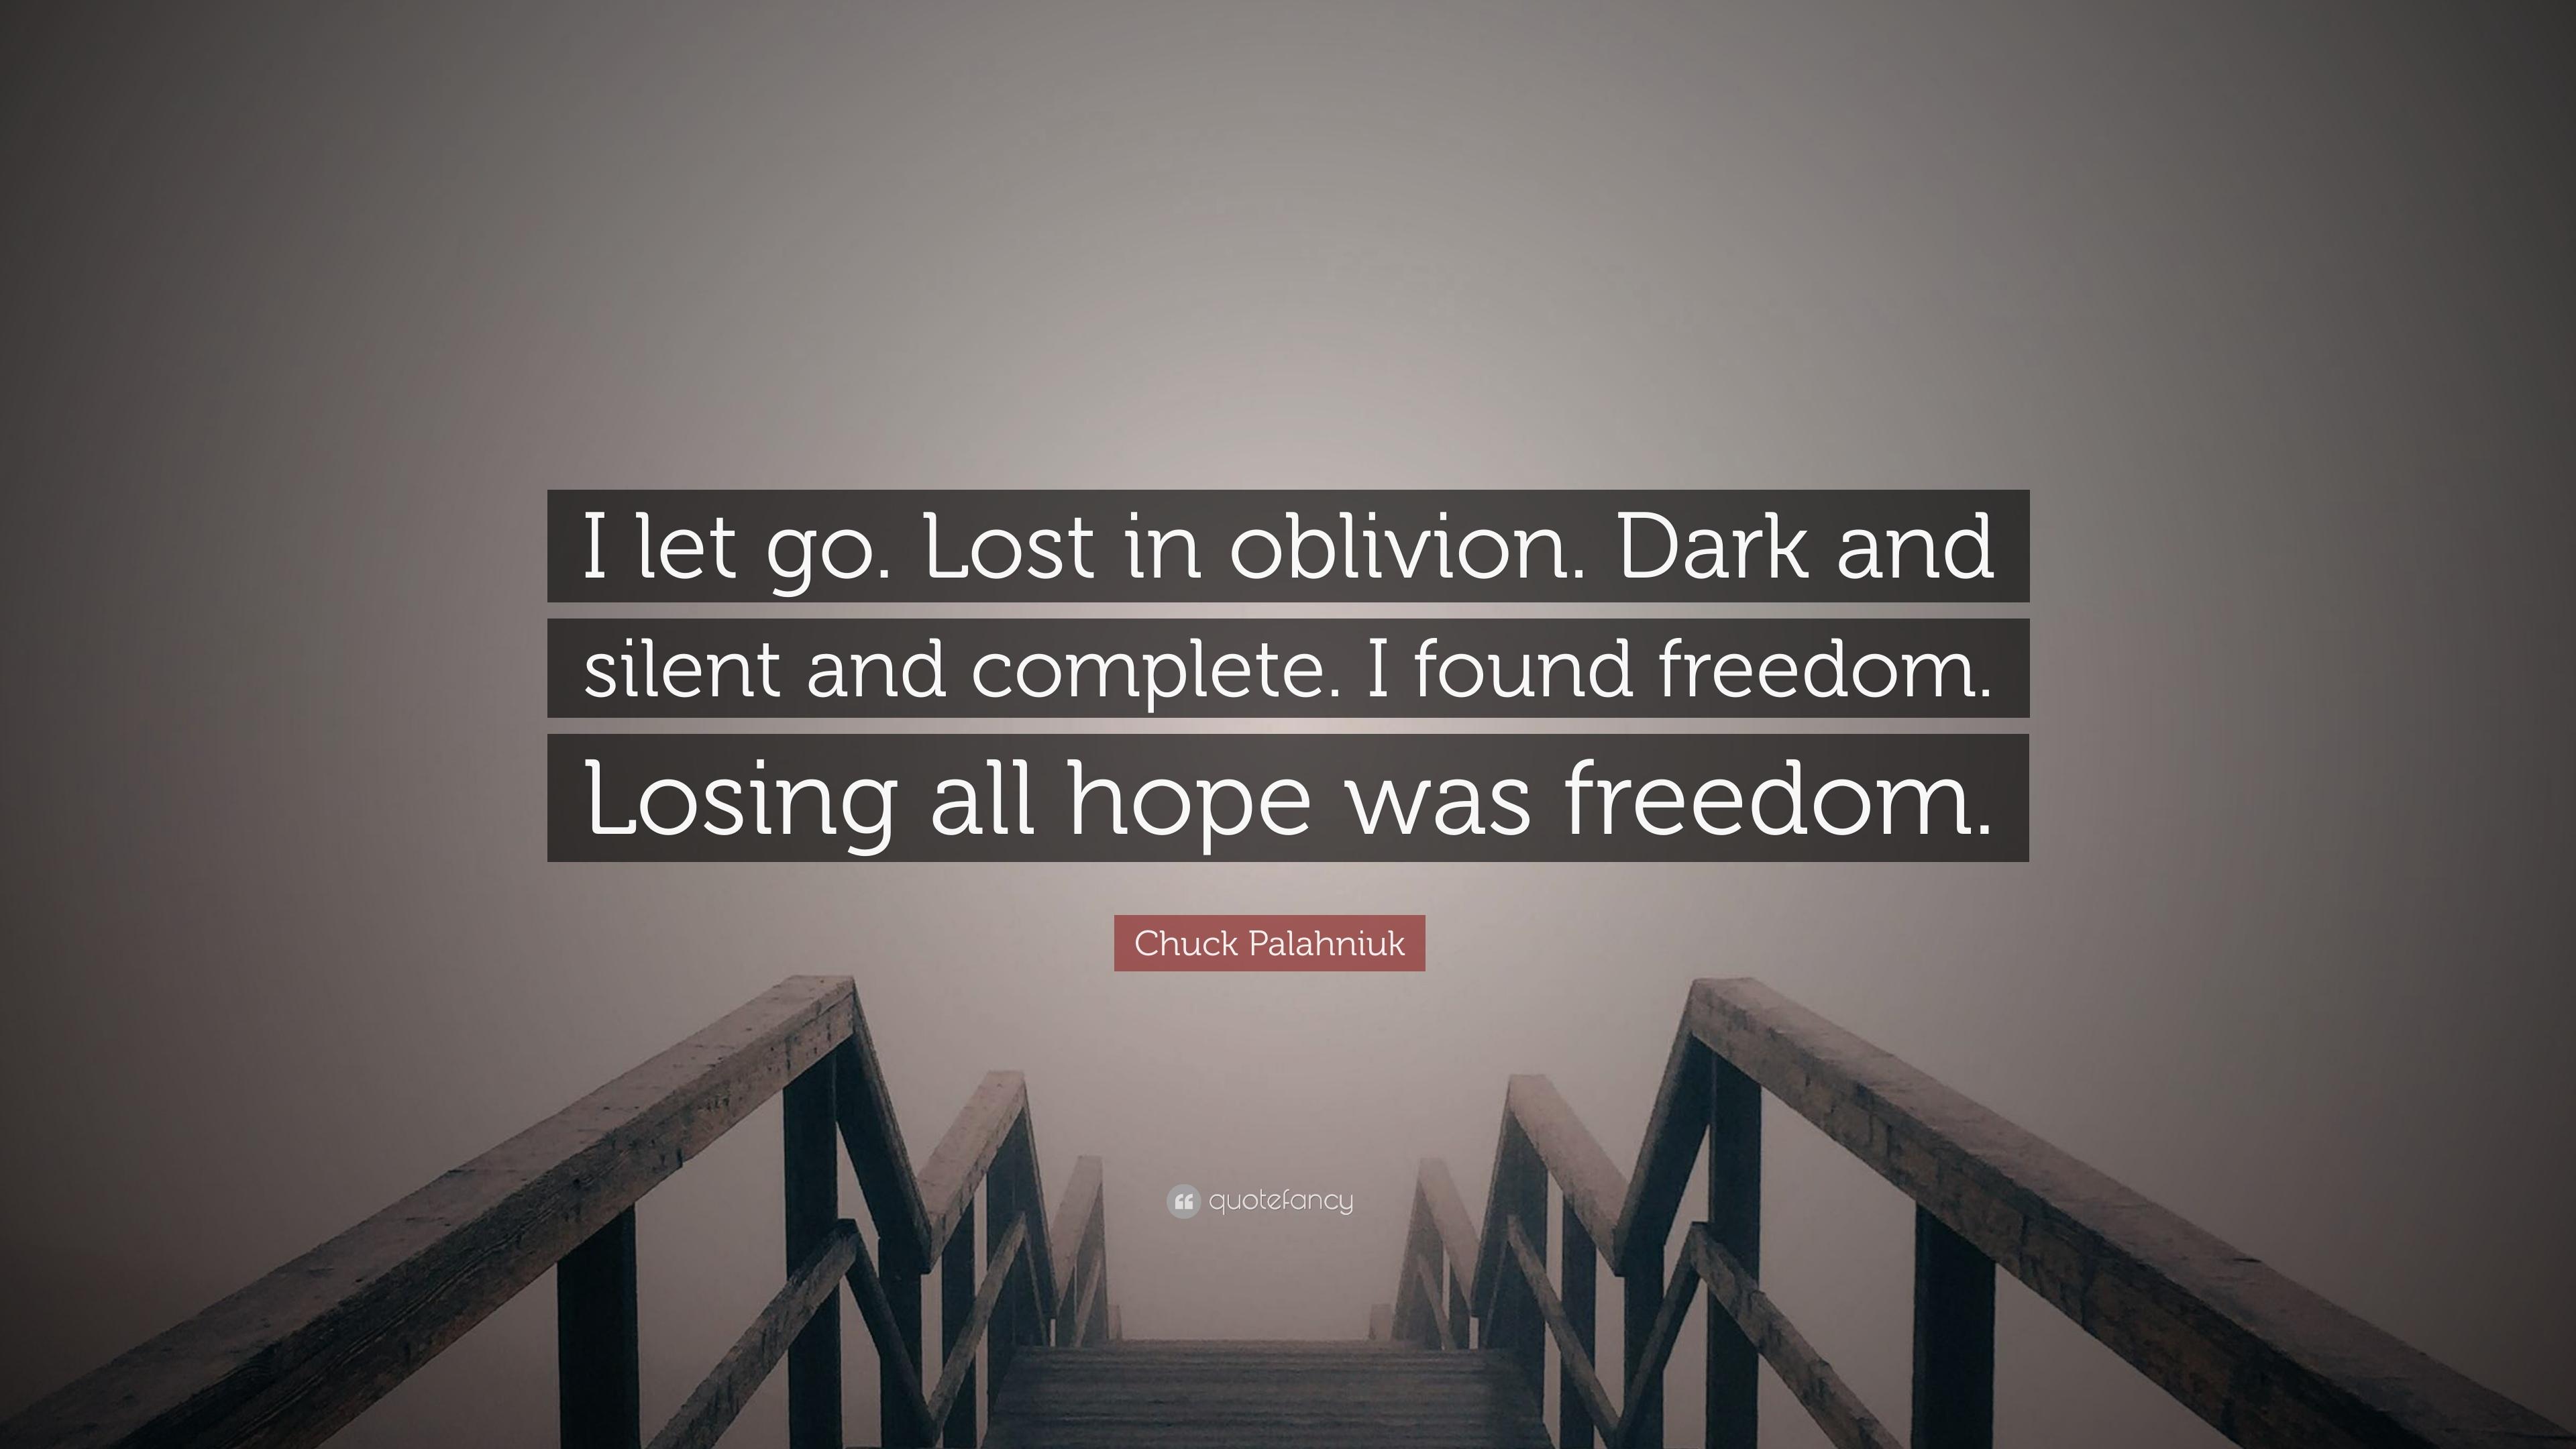 Chuck Palahniuk Quote: “I let go. Lost in oblivion. Dark